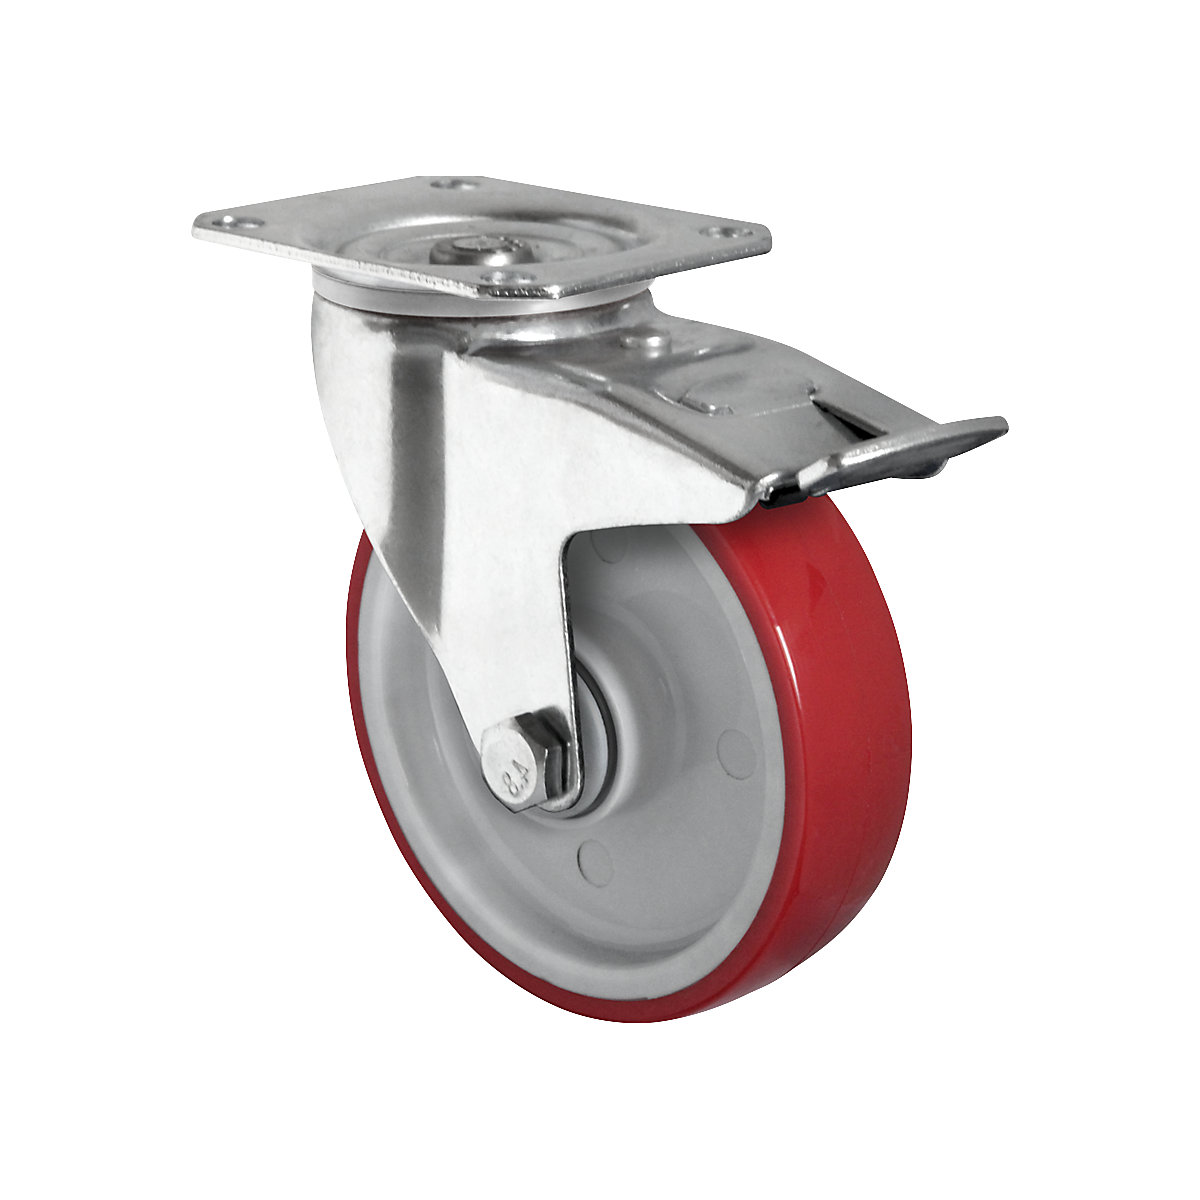 Červená PU obruč na polyamidovém disku – eurokraft basic, Ø kola x šířka 200 x 46 mm, od 2 ks, otočné kolo s dvojitou brzdou-1